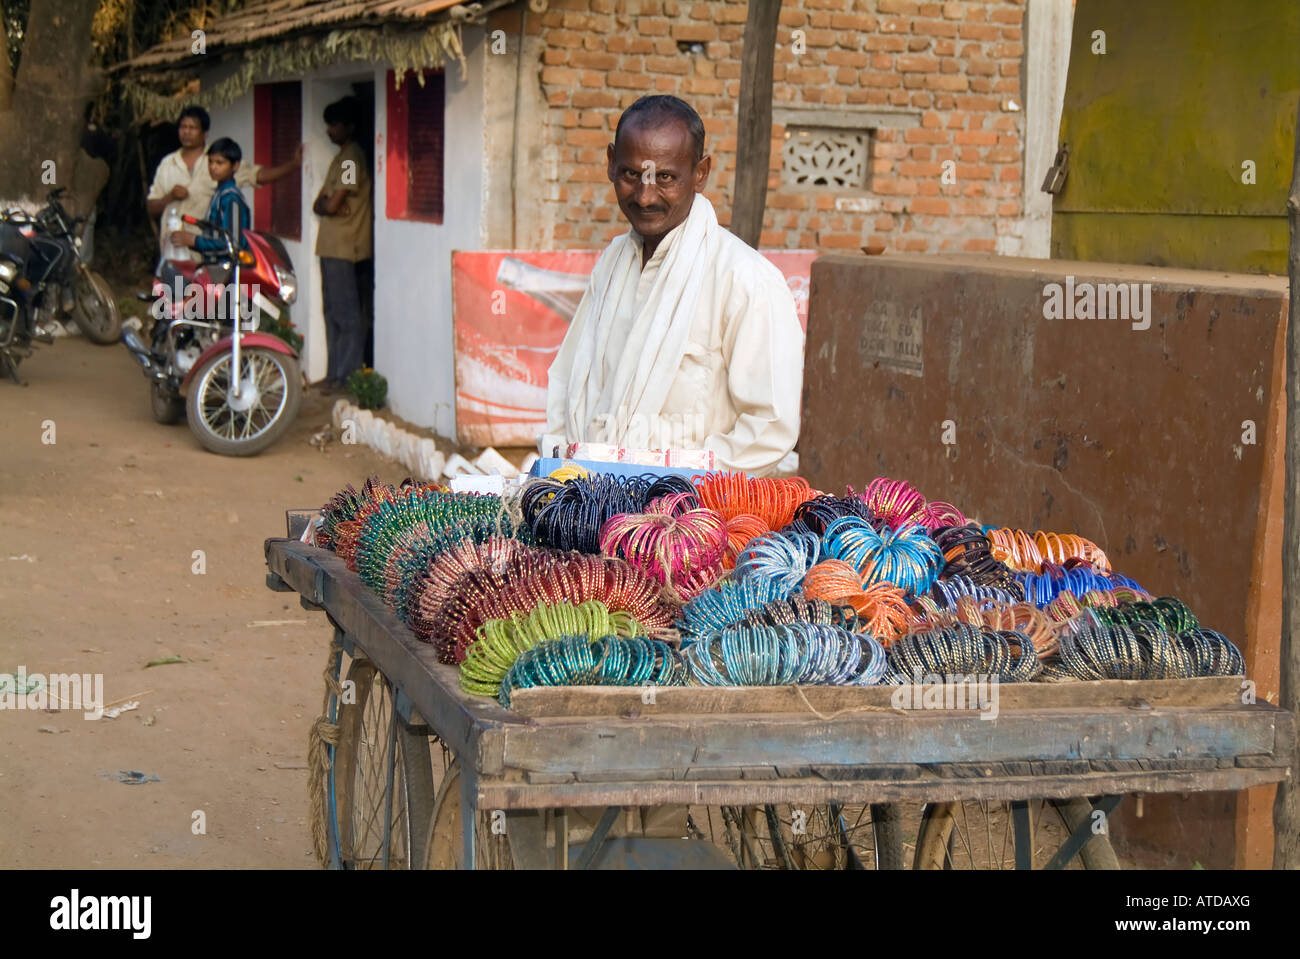 Street seller in India Stock Photo